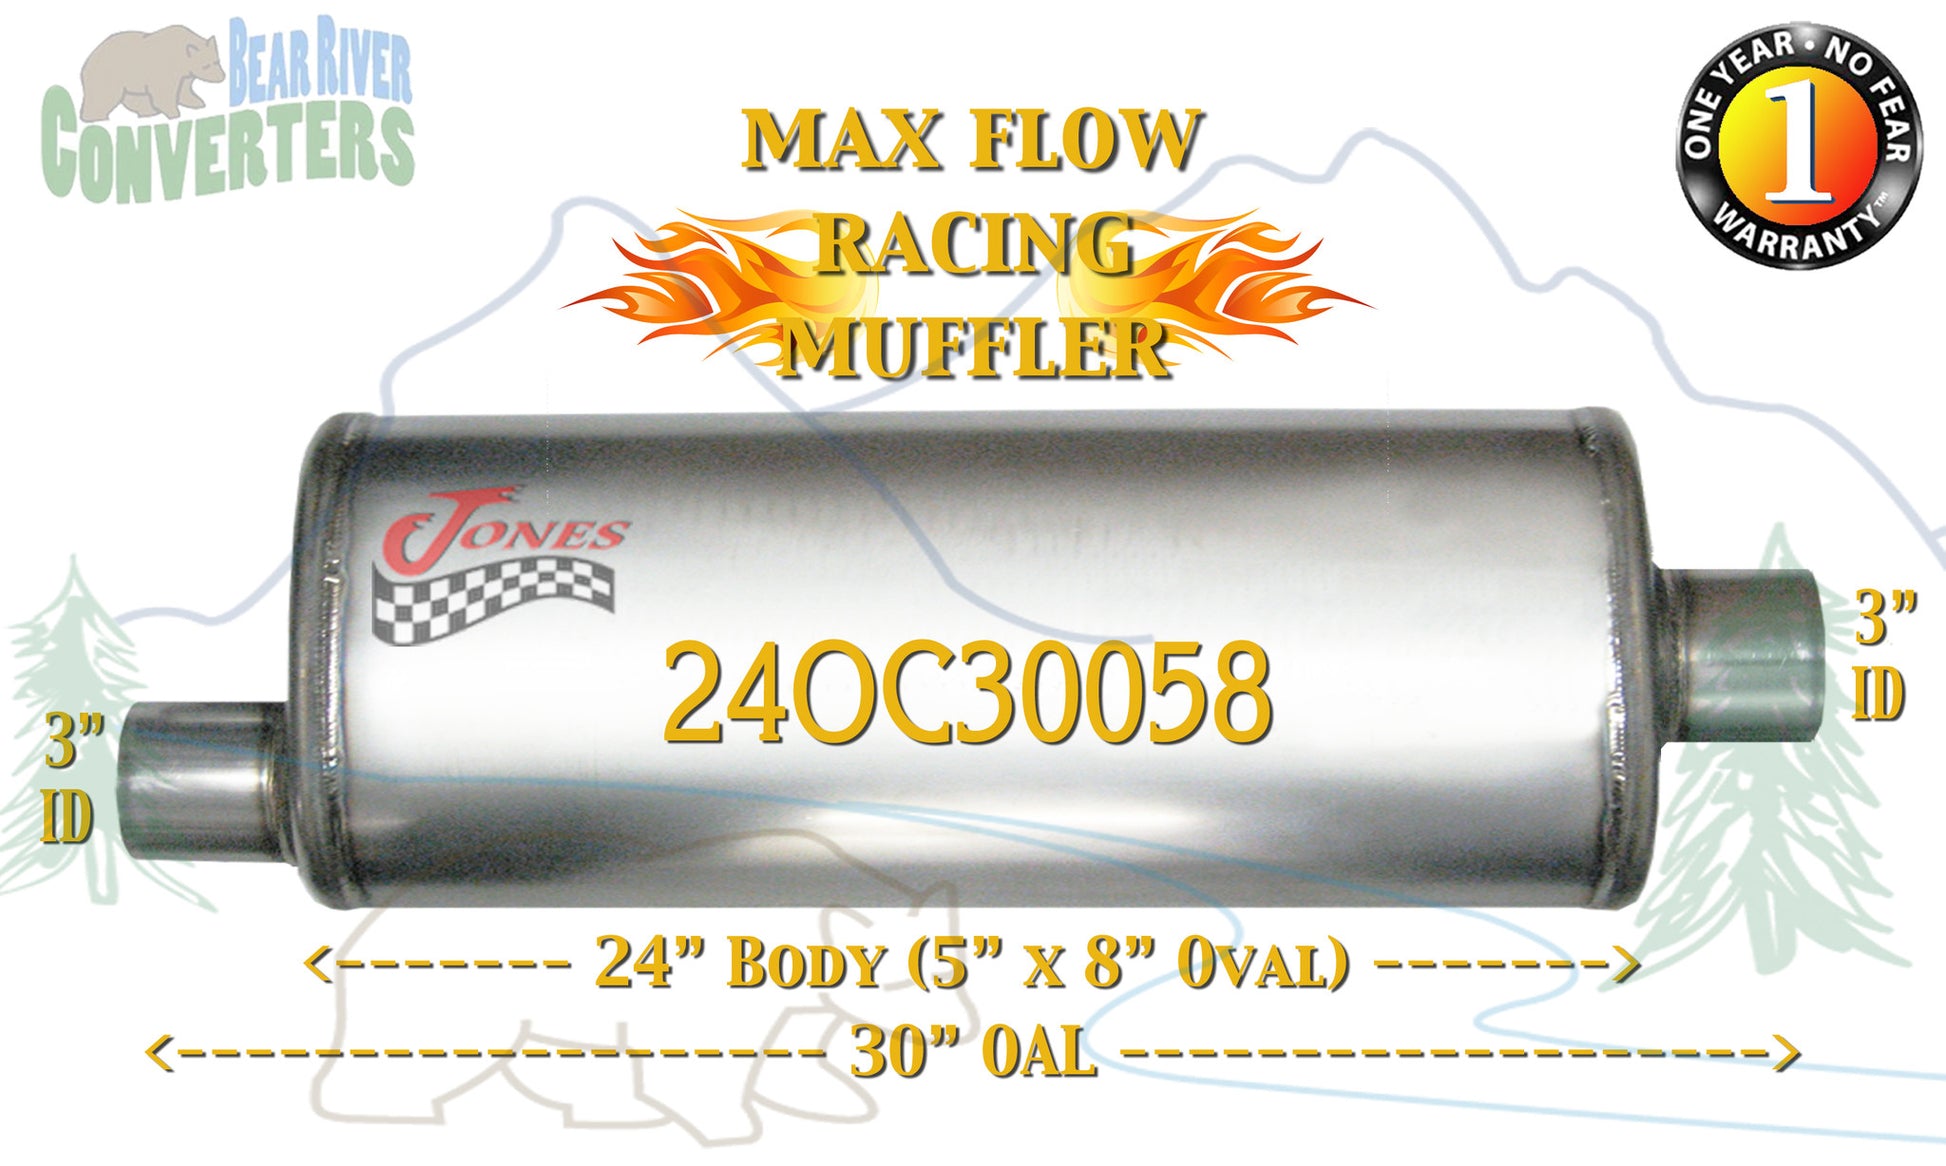 24OC30058 Jones MF2289 Max Flow Racing Muffler 24” Oval Body 3” Pipe Offset/Center 30” OAL - Bear River Converters